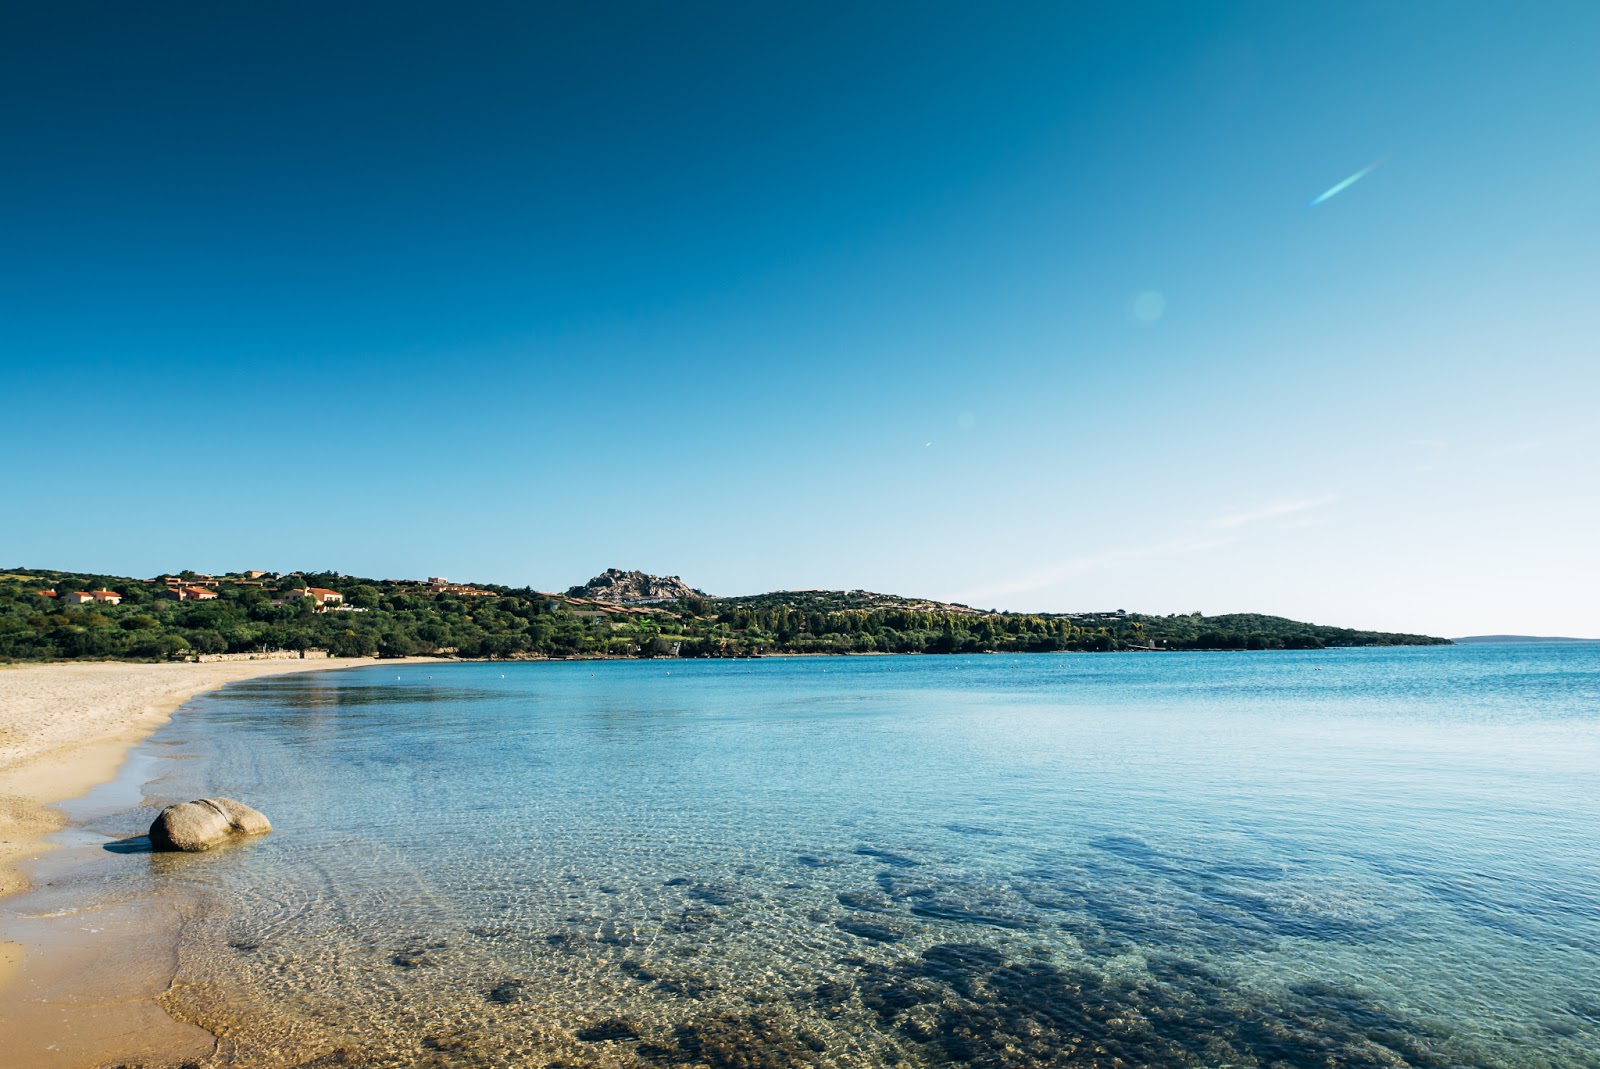 Foto de Spiaggia Degli Svedesi - lugar popular entre os apreciadores de relaxamento